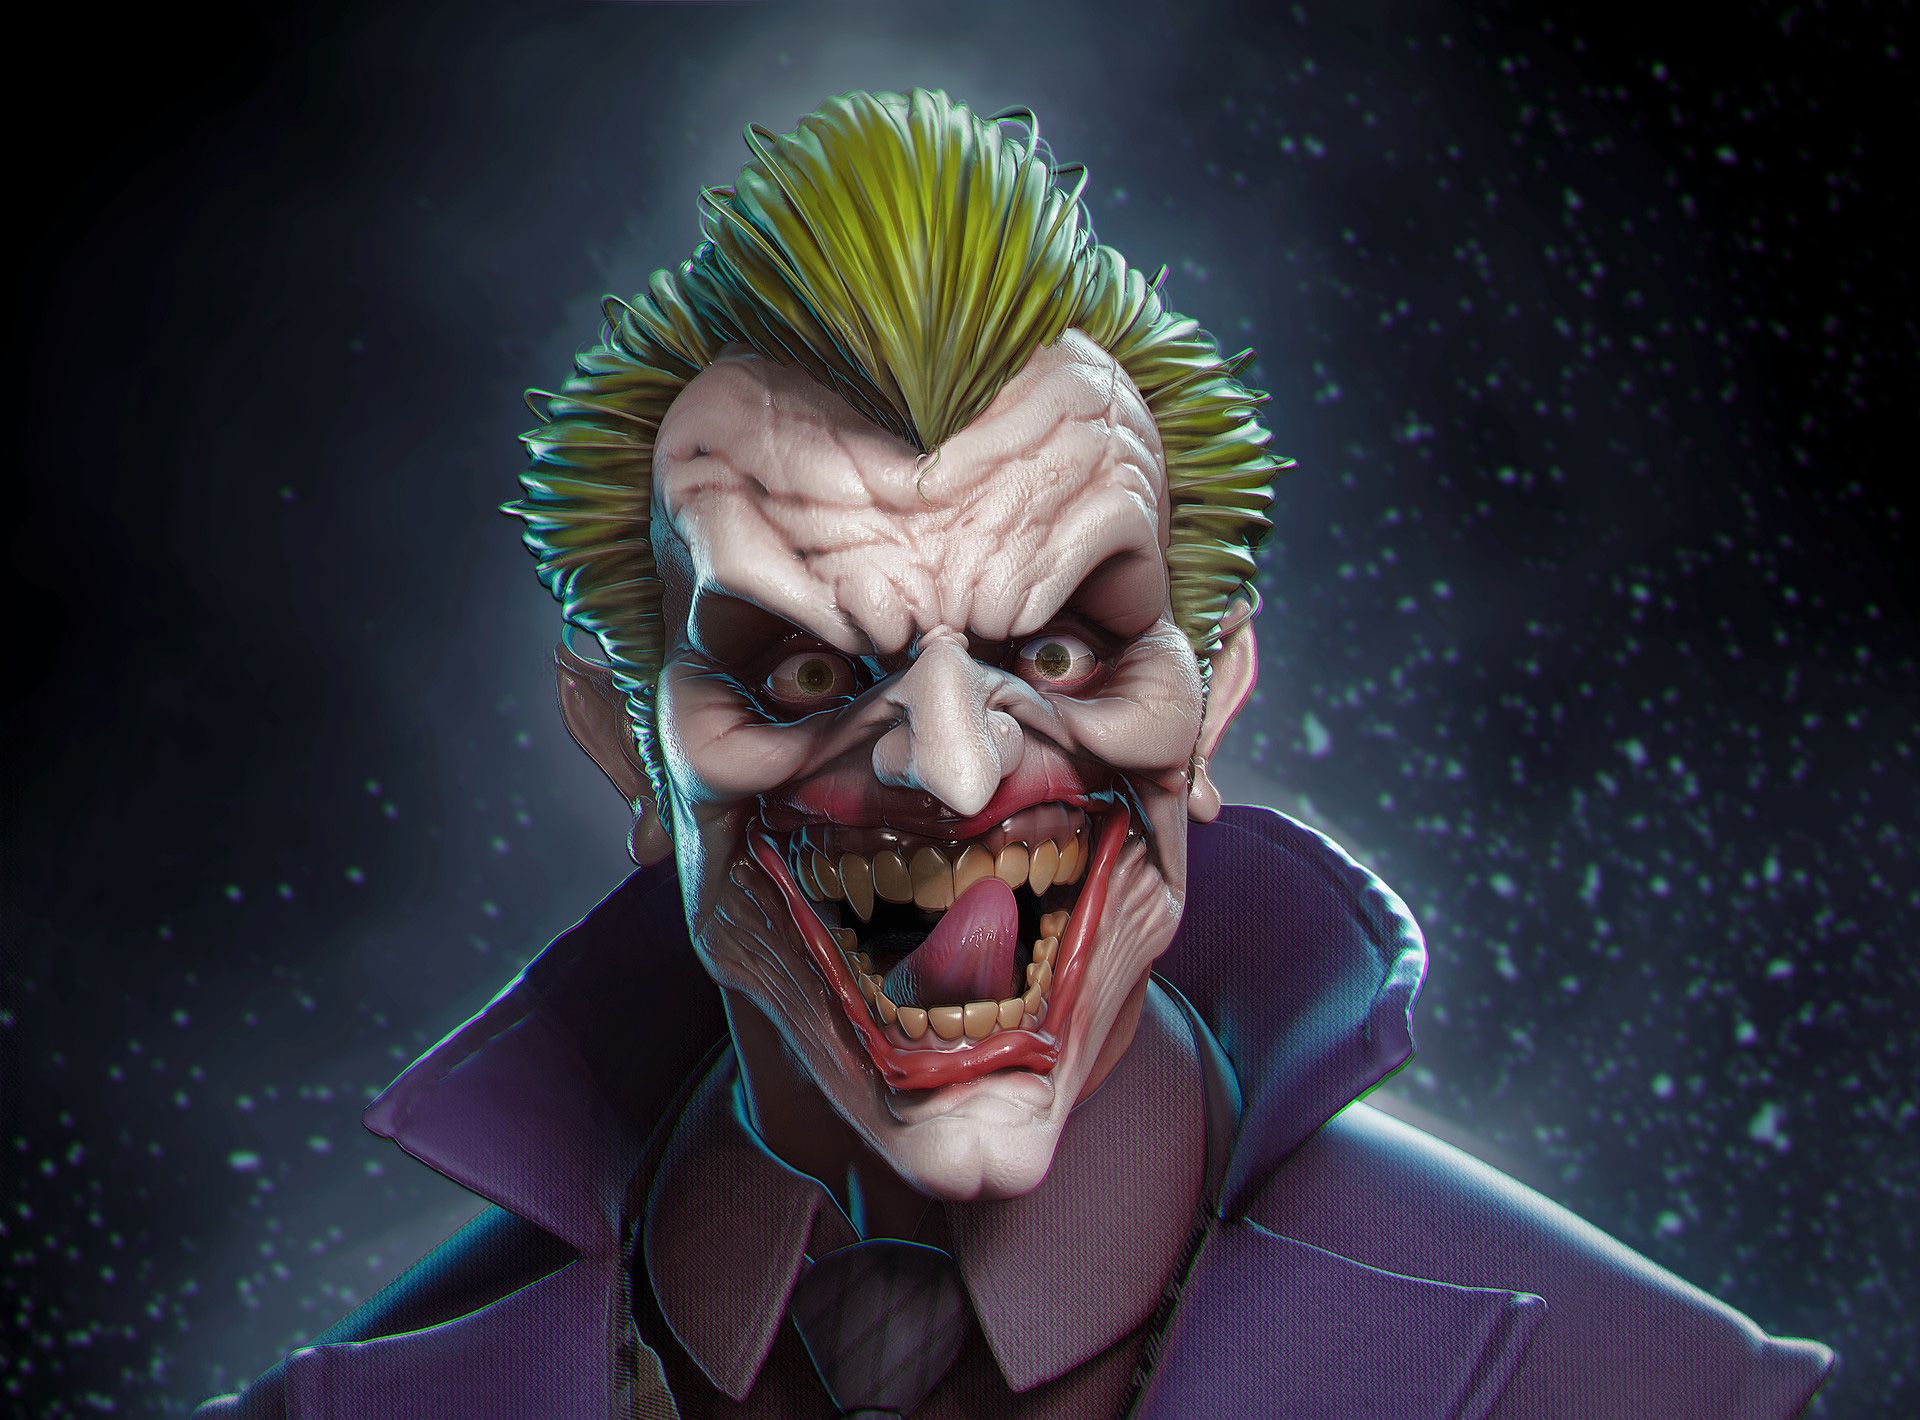 Joker 3D Art, HD Artist, 4k Wallpaper, Image, Background, Photo and Picture